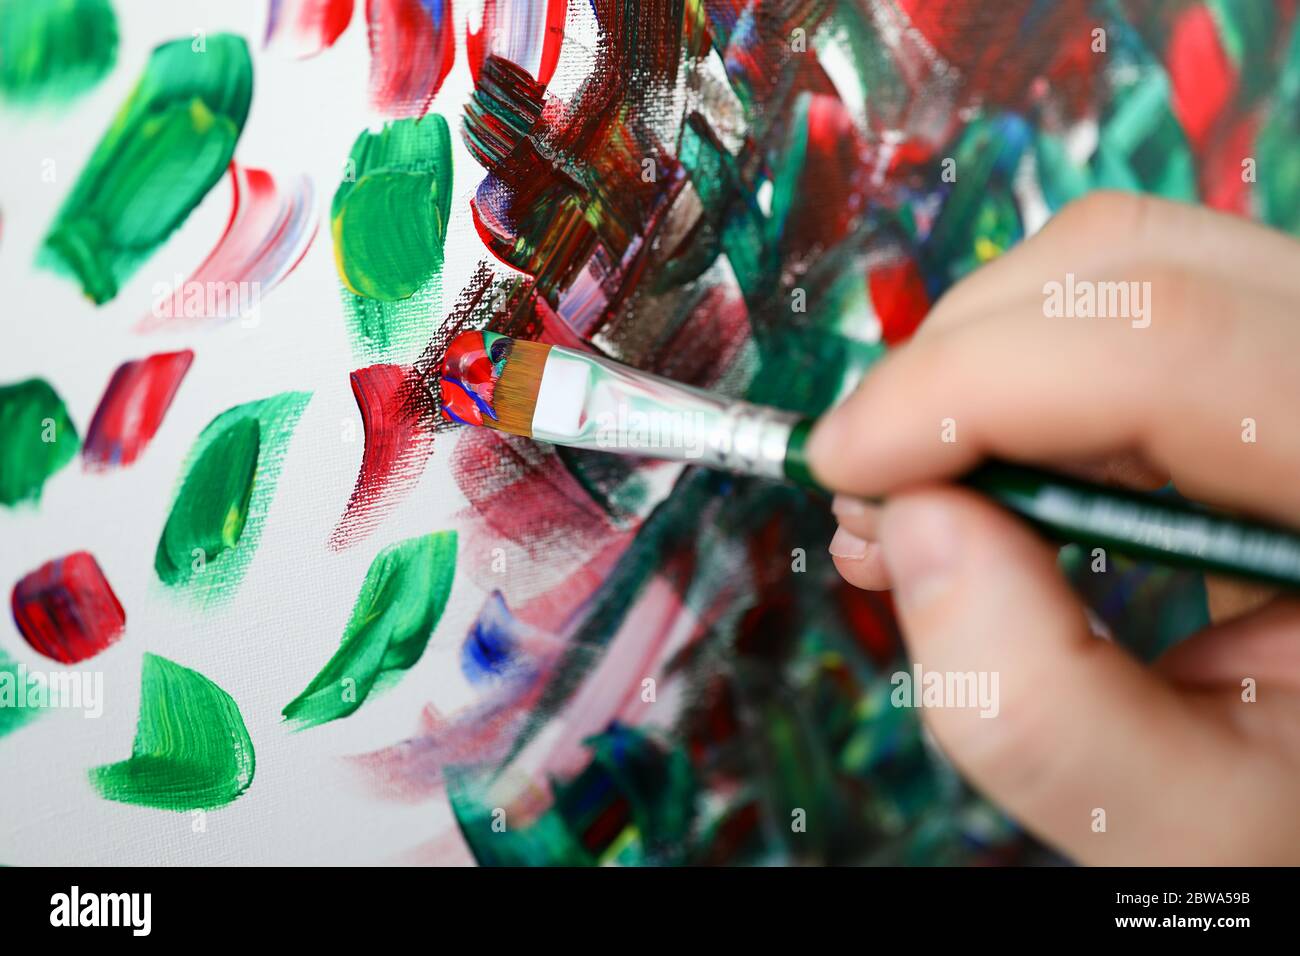 https://c8.alamy.com/comp/2BWA59B/hands-holding-brush-with-multi-colored-paint-2BWA59B.jpg